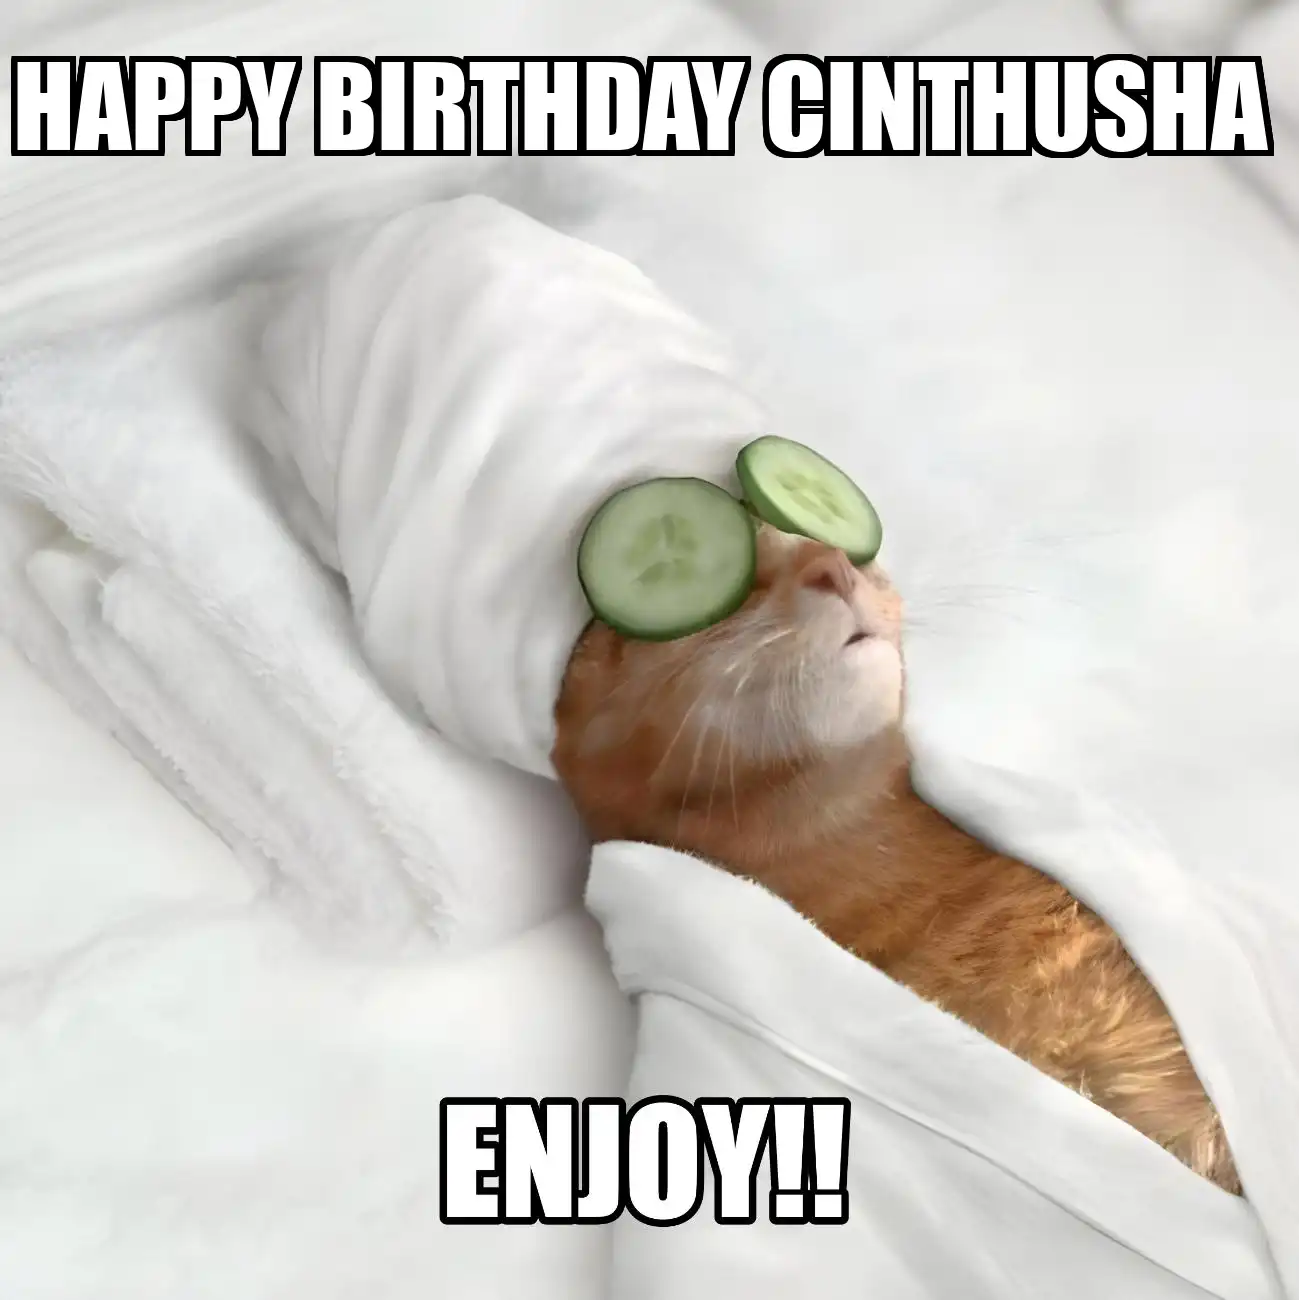 Happy Birthday Cinthusha Enjoy Cat Meme